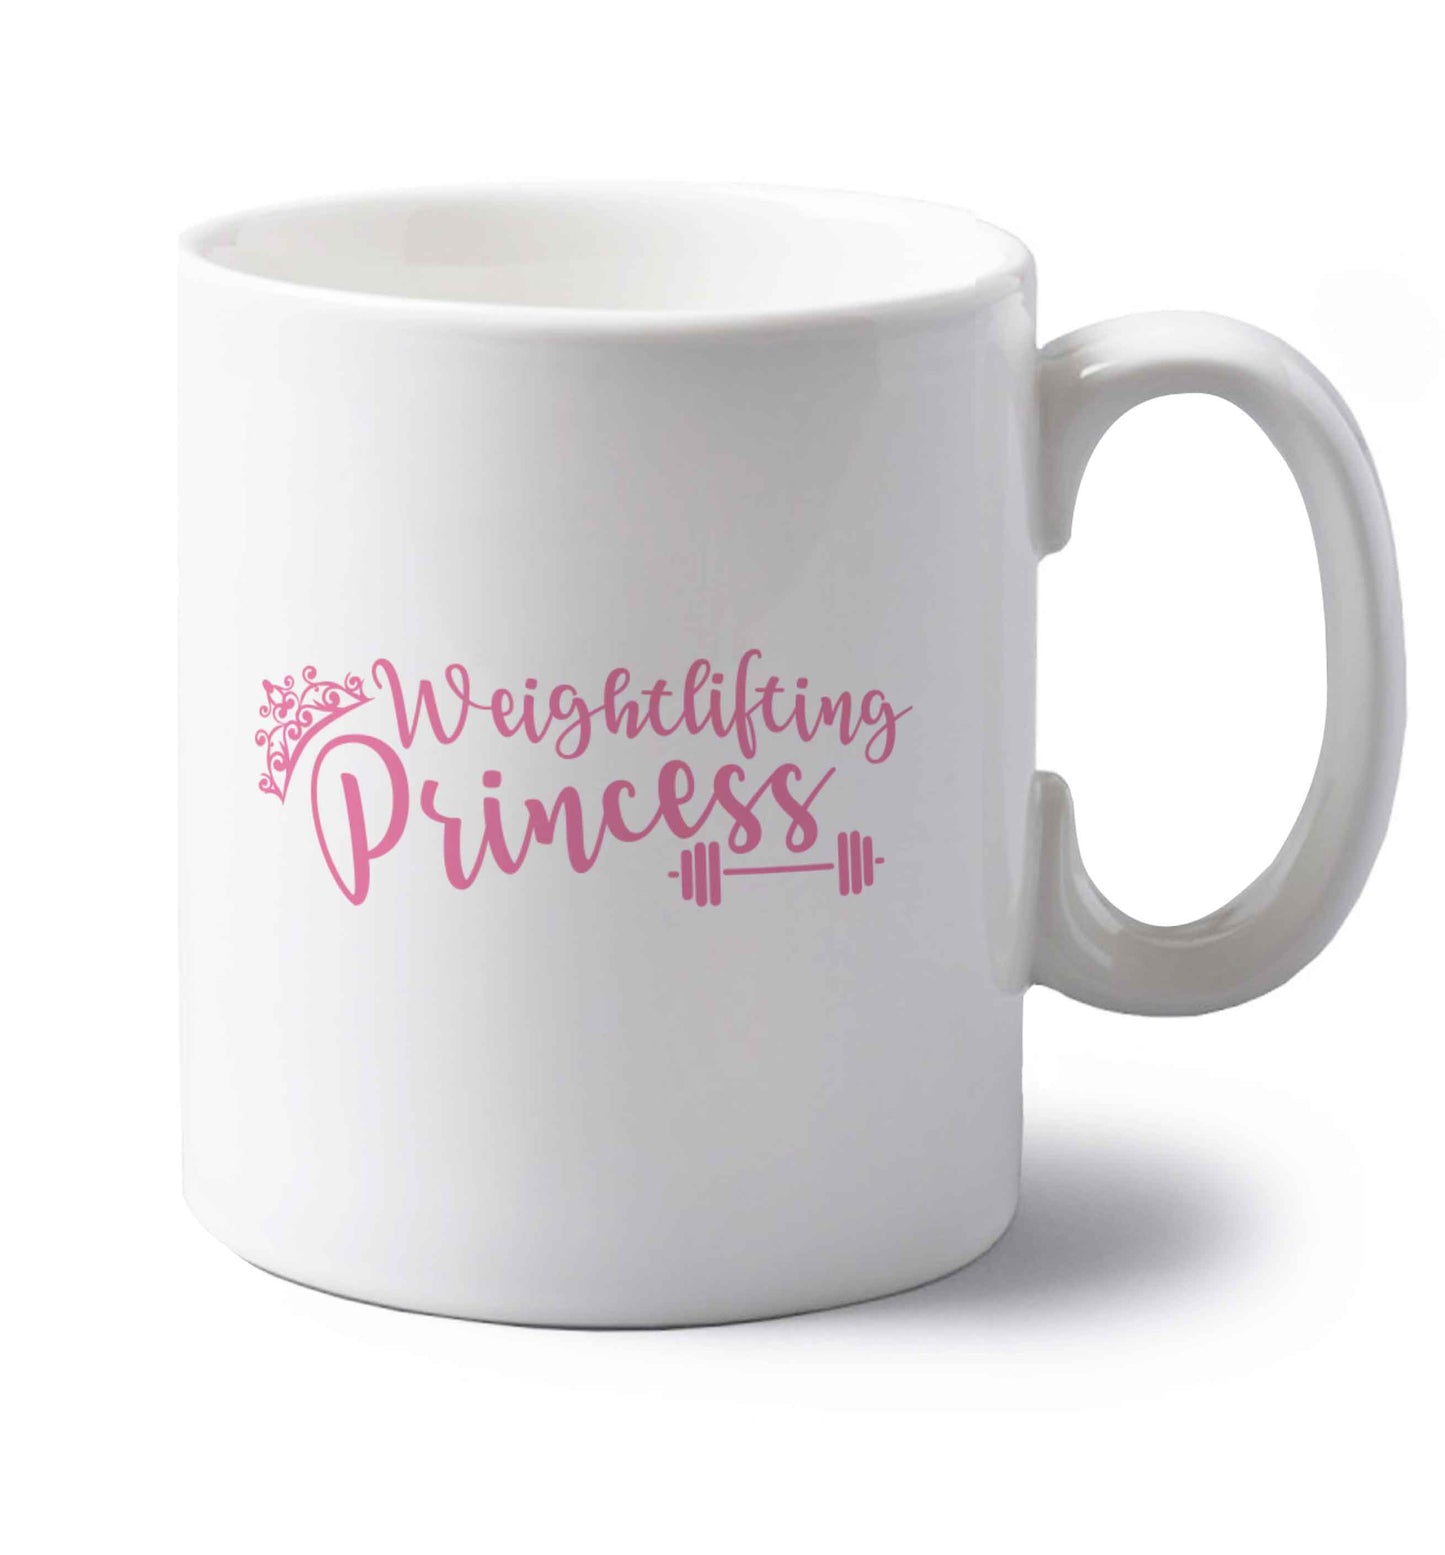 Weightlifting princess left handed white ceramic mug 